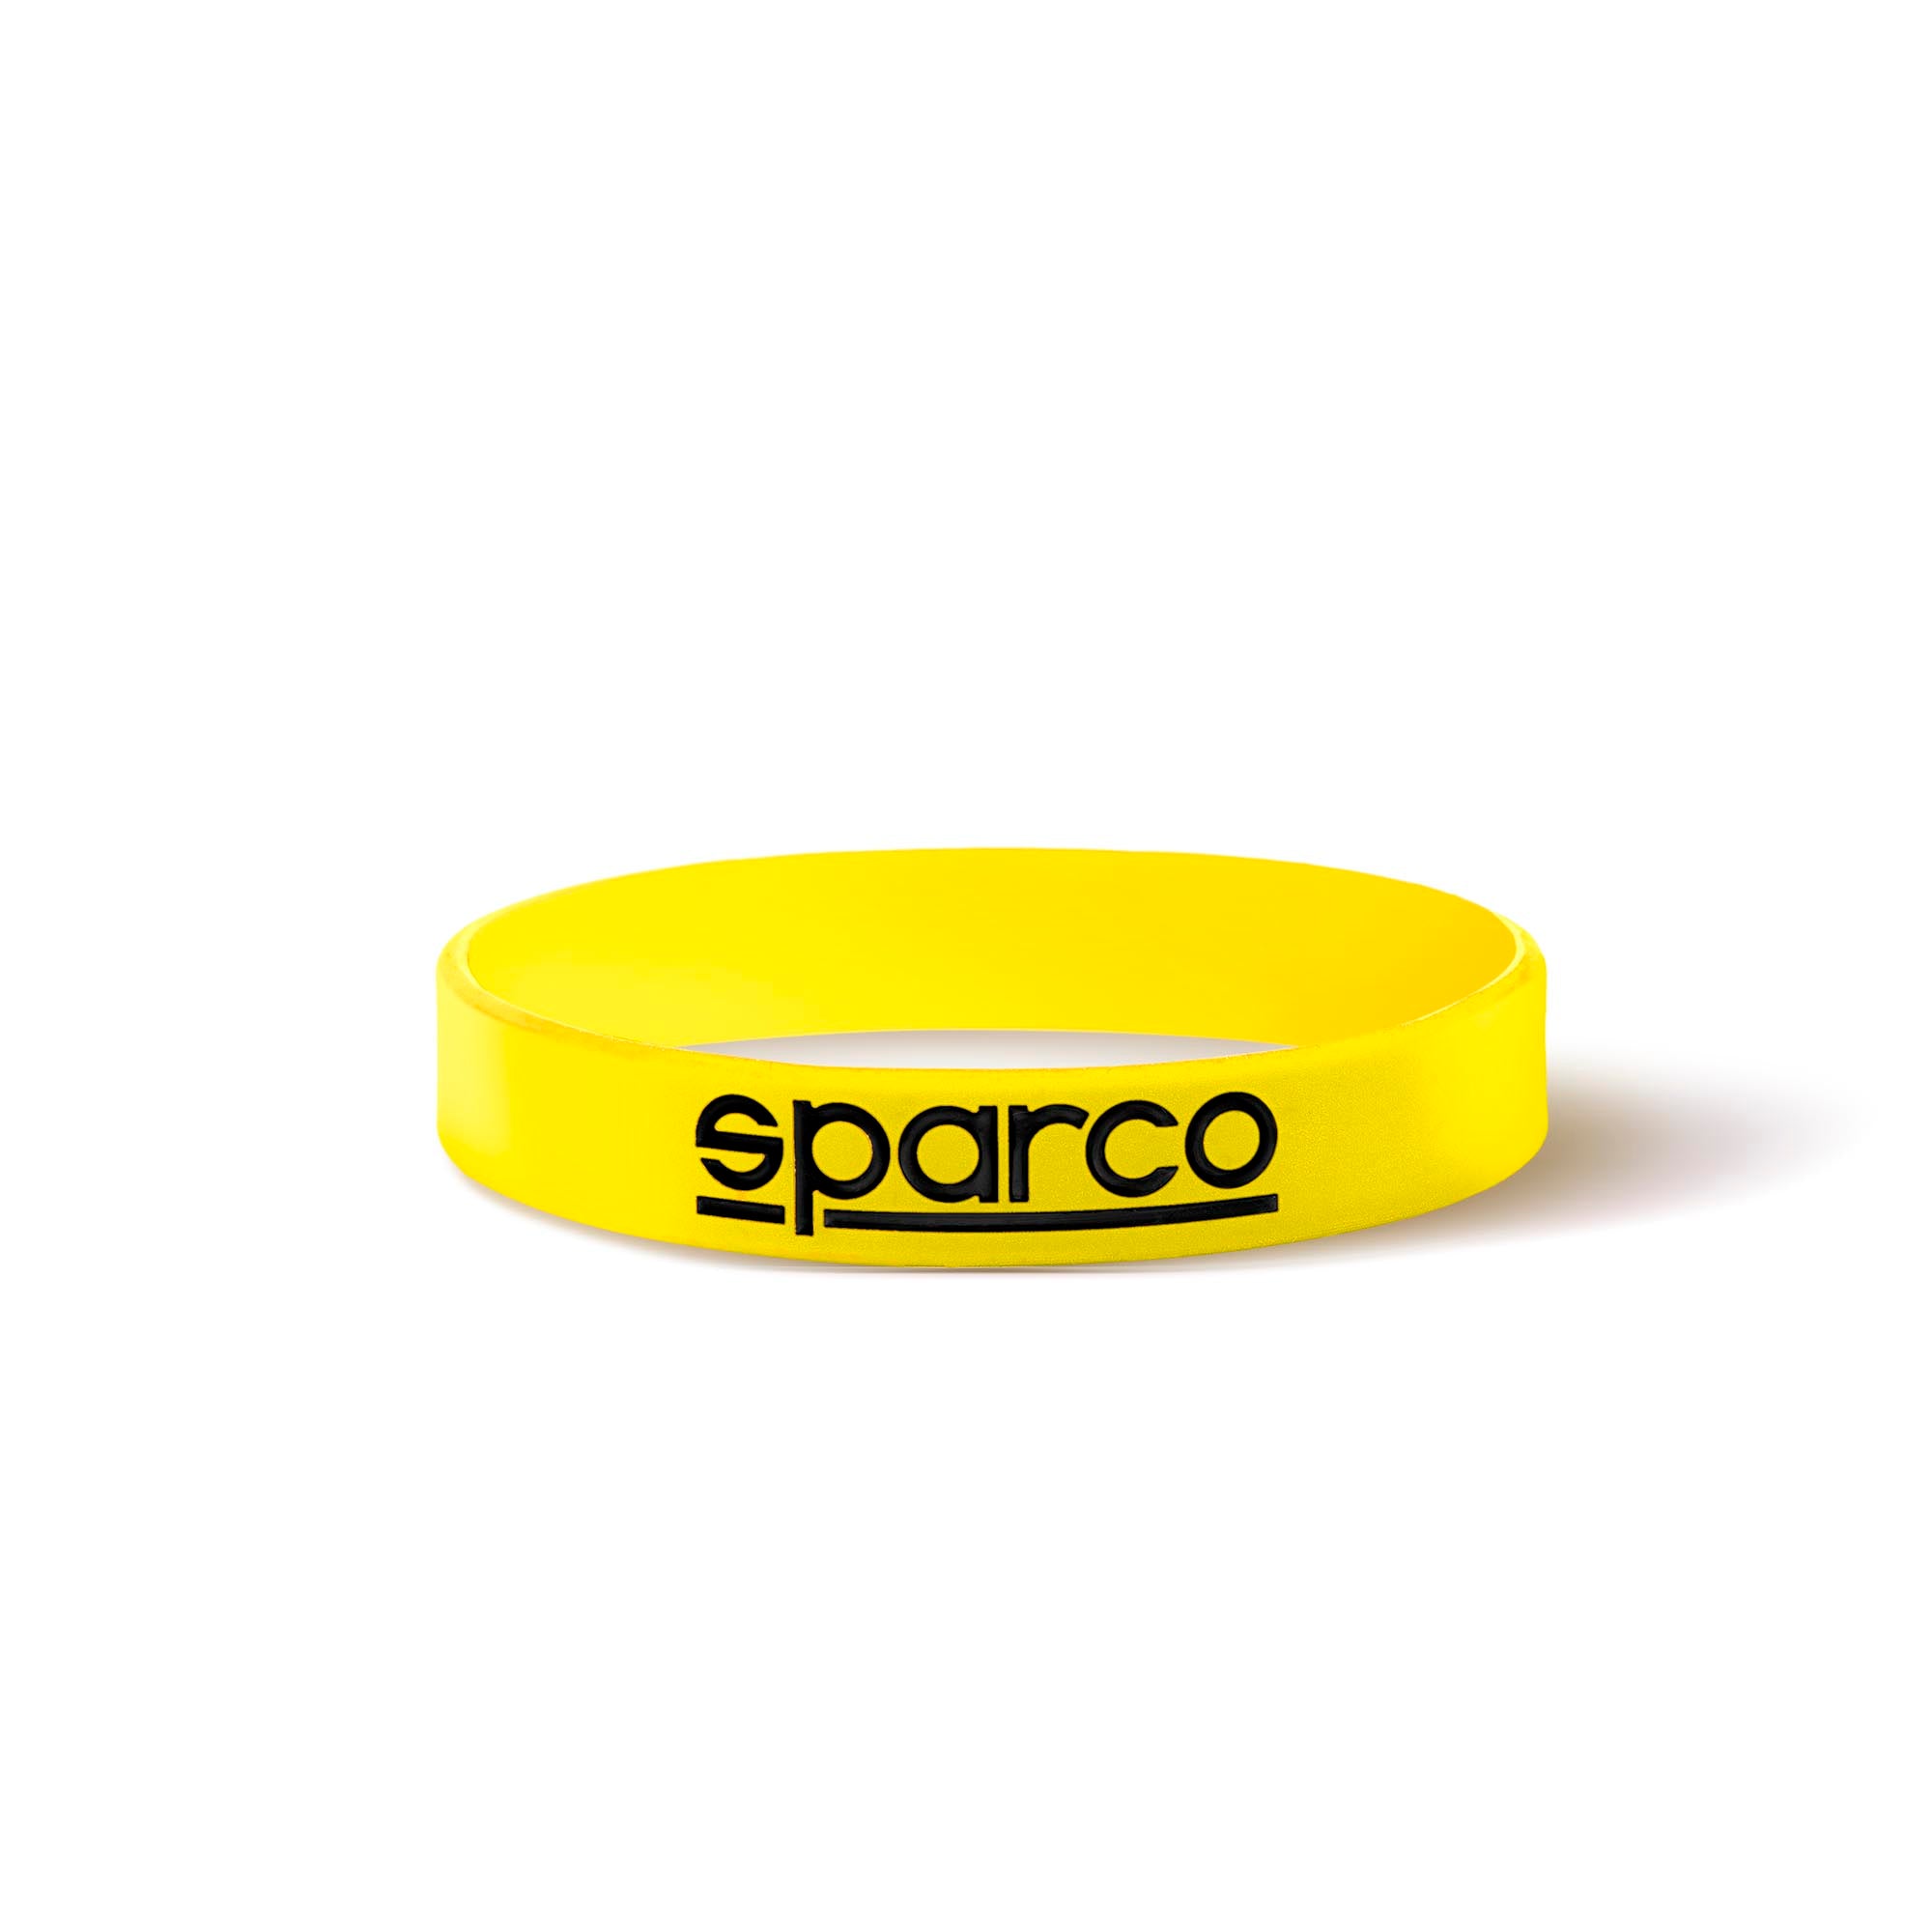 Sparco Bracelet